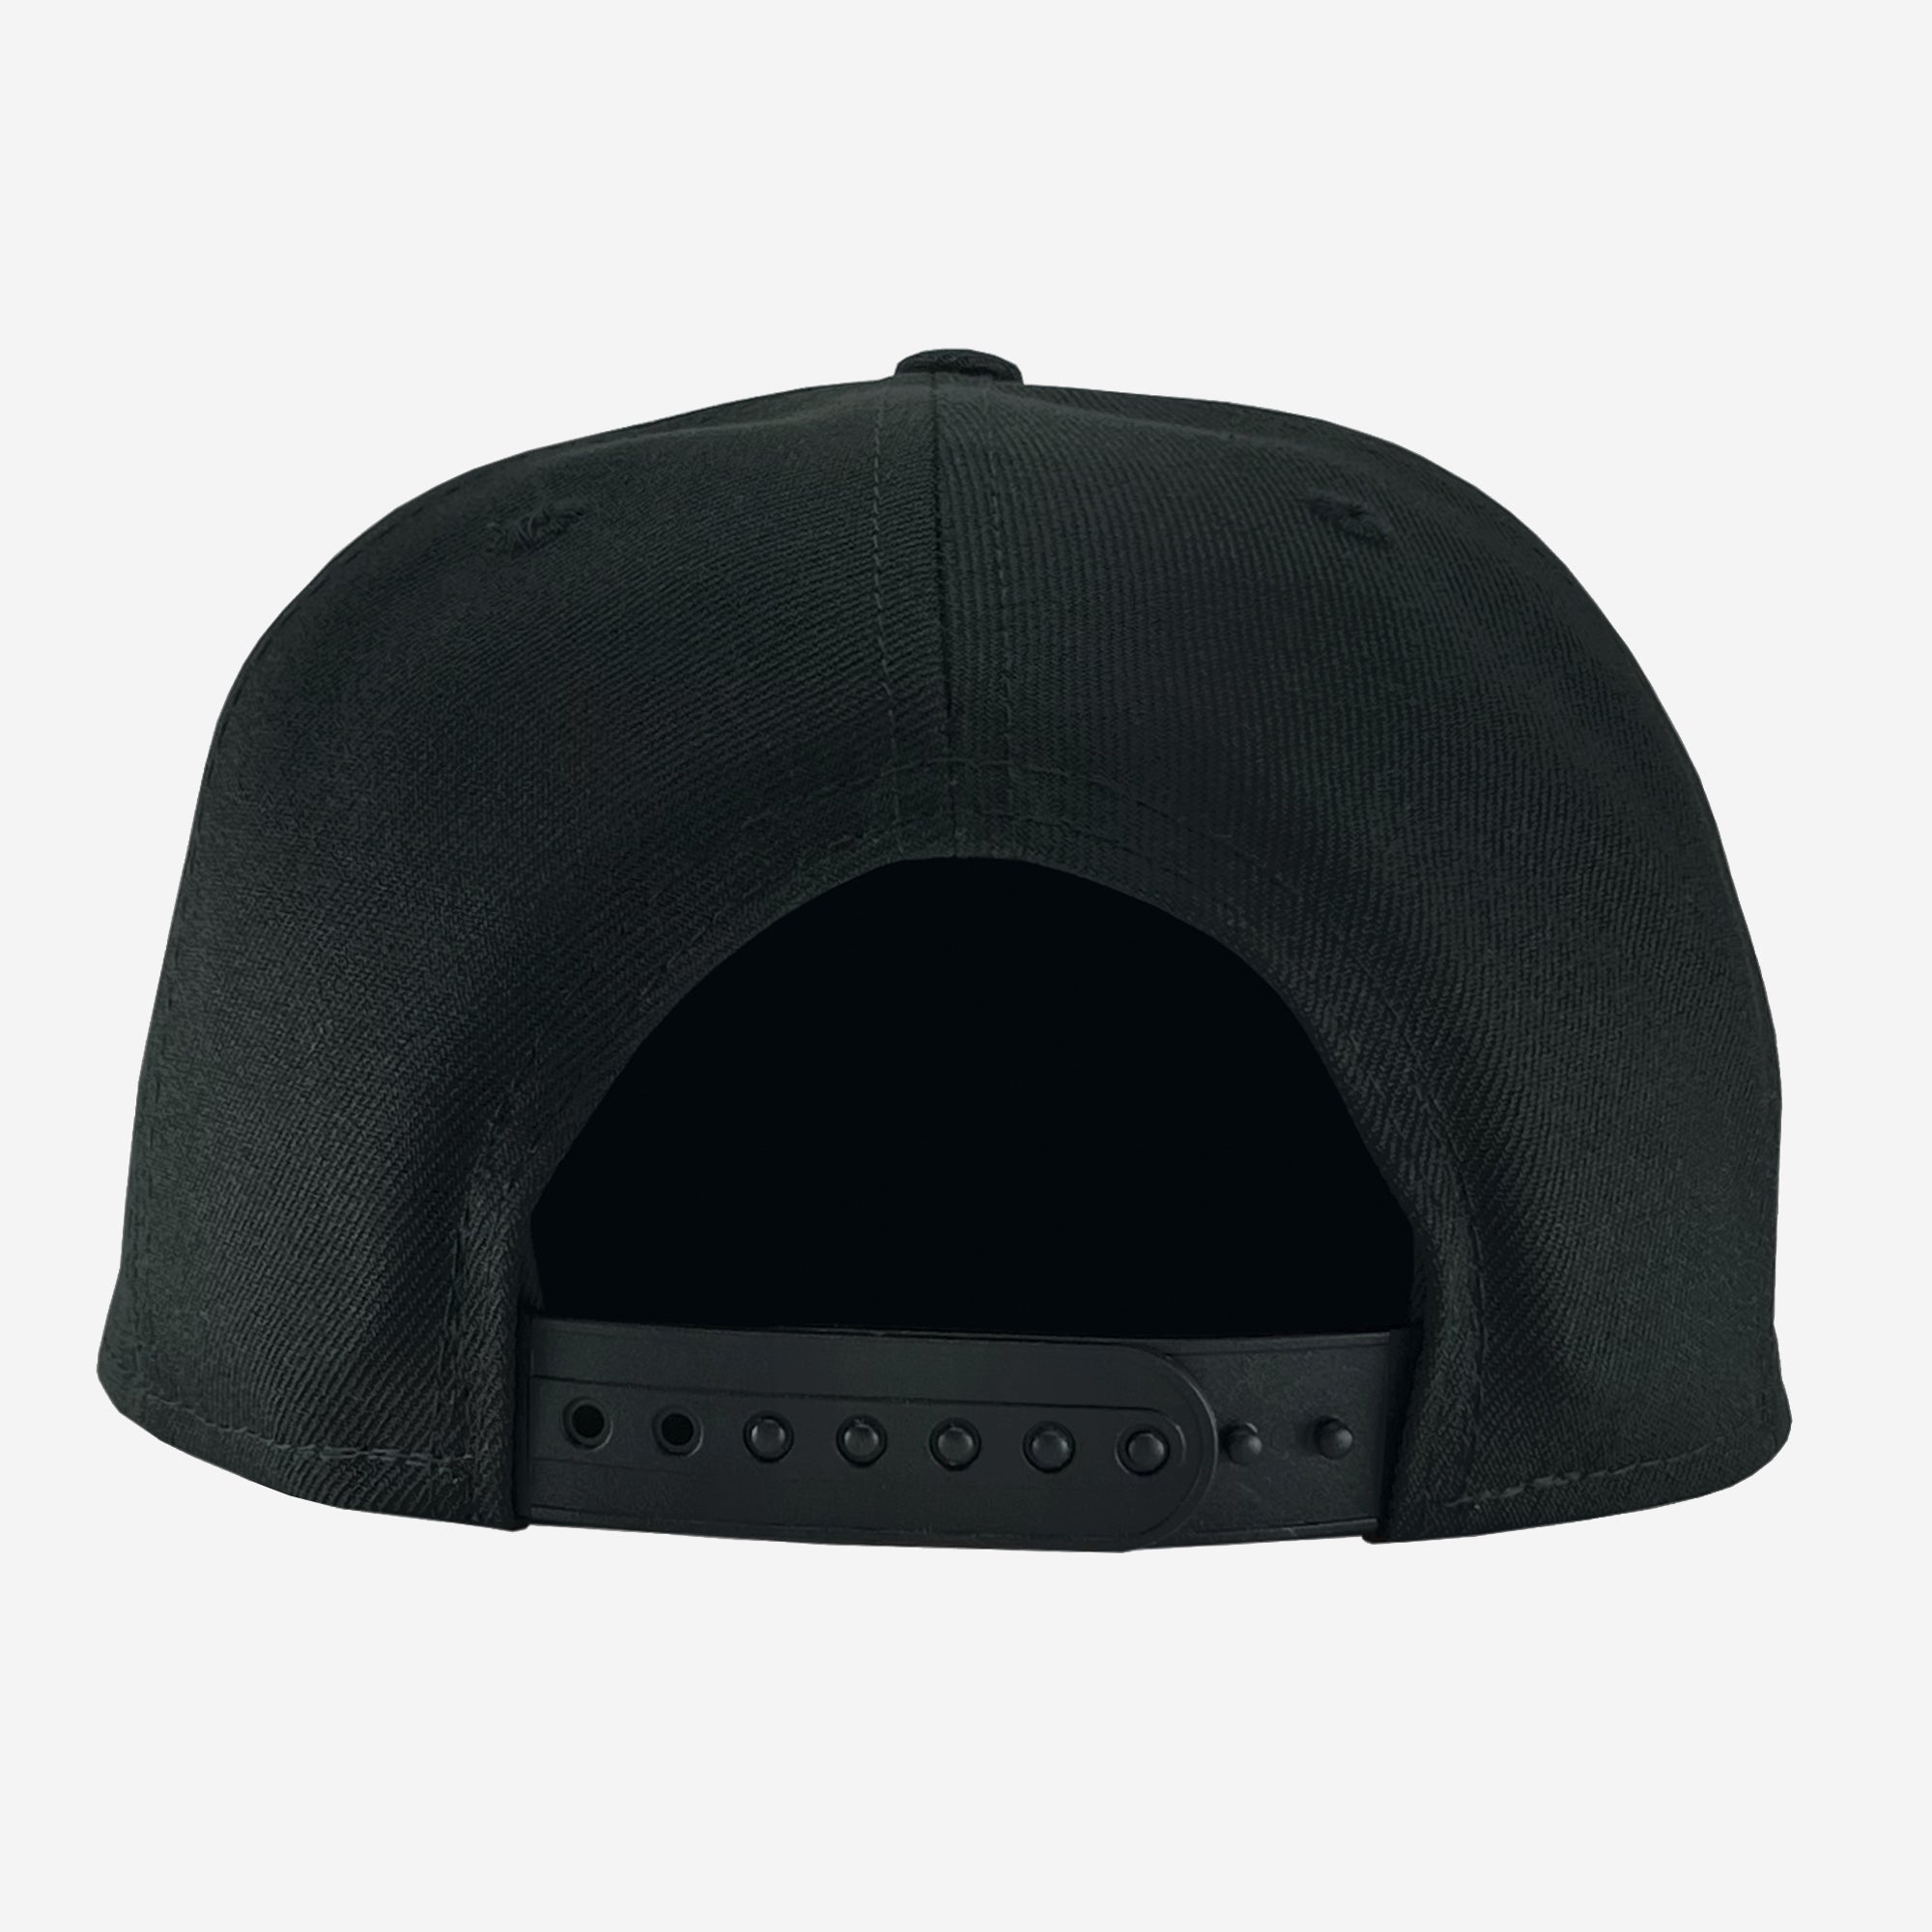 Backside of New Era 9FIFTY black cap with black plastic snap back closure.